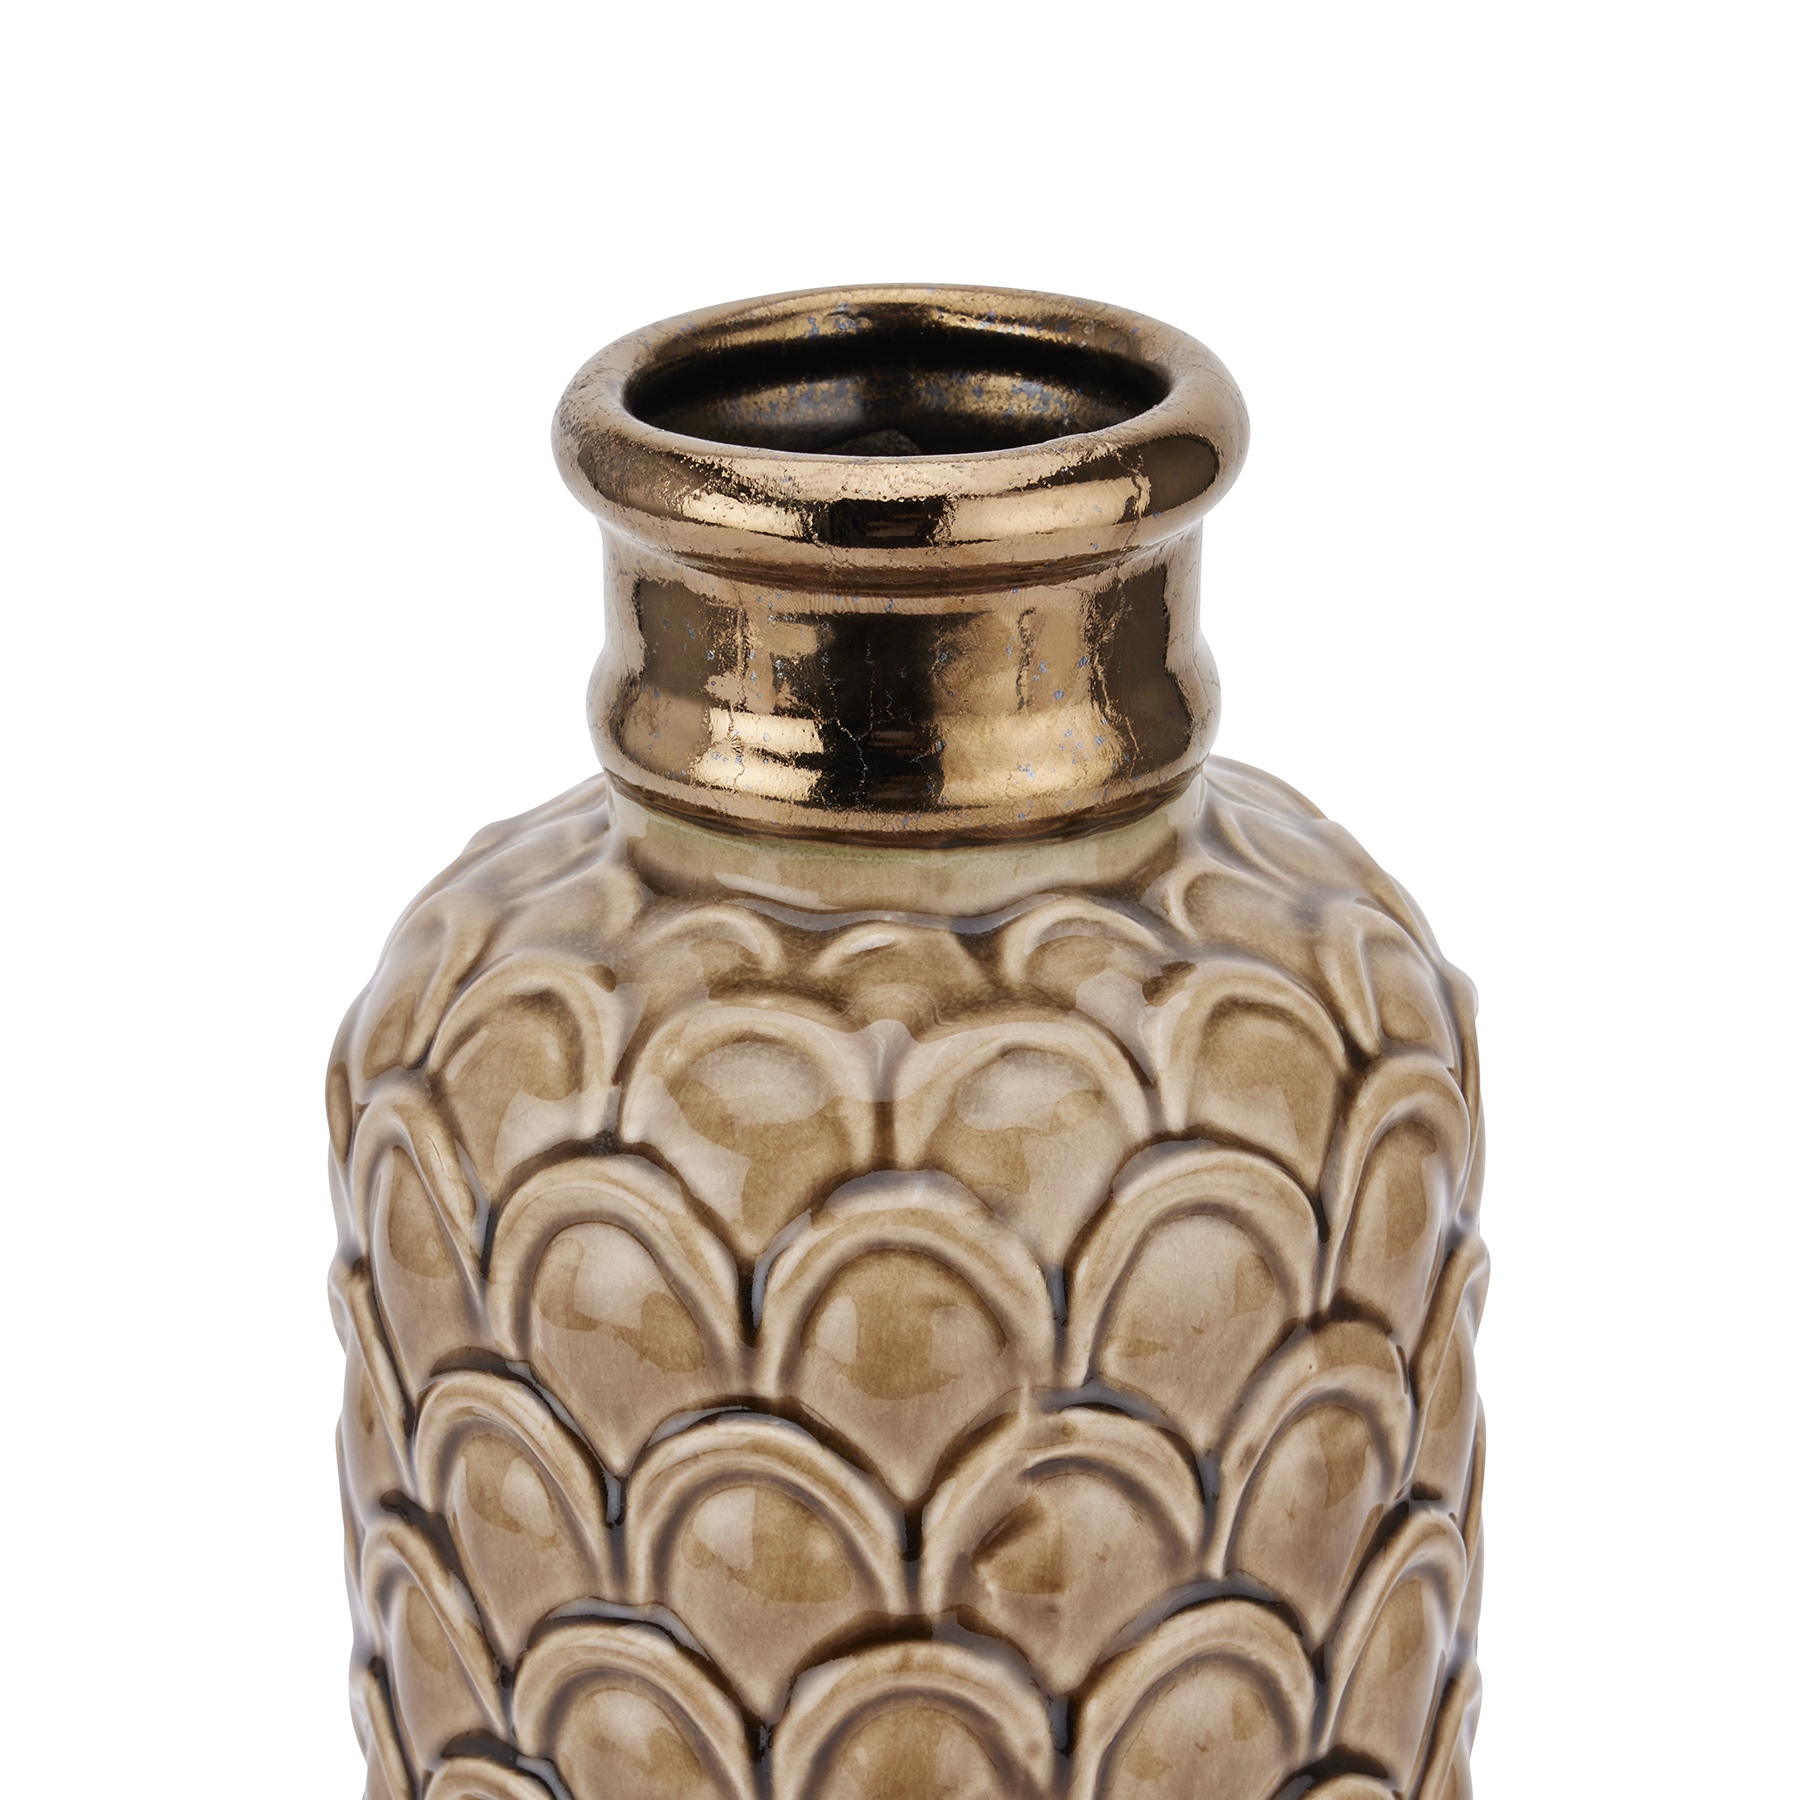 Seville Collection Large Caramel Scalloped Vase - Image 2